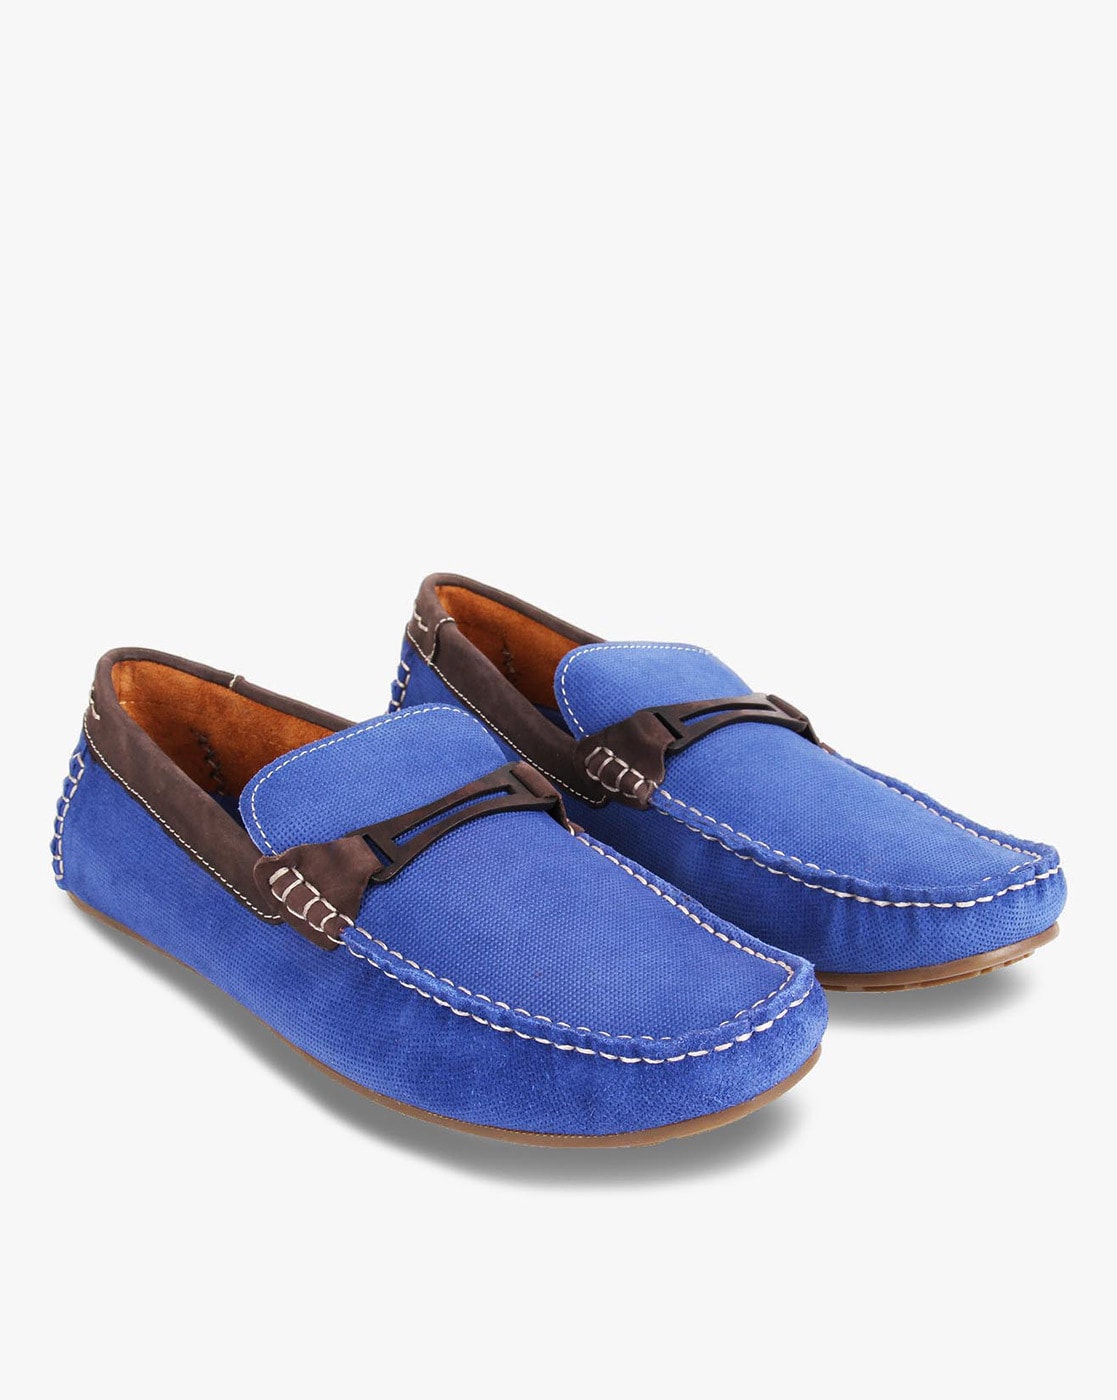 steve madden blue loafers